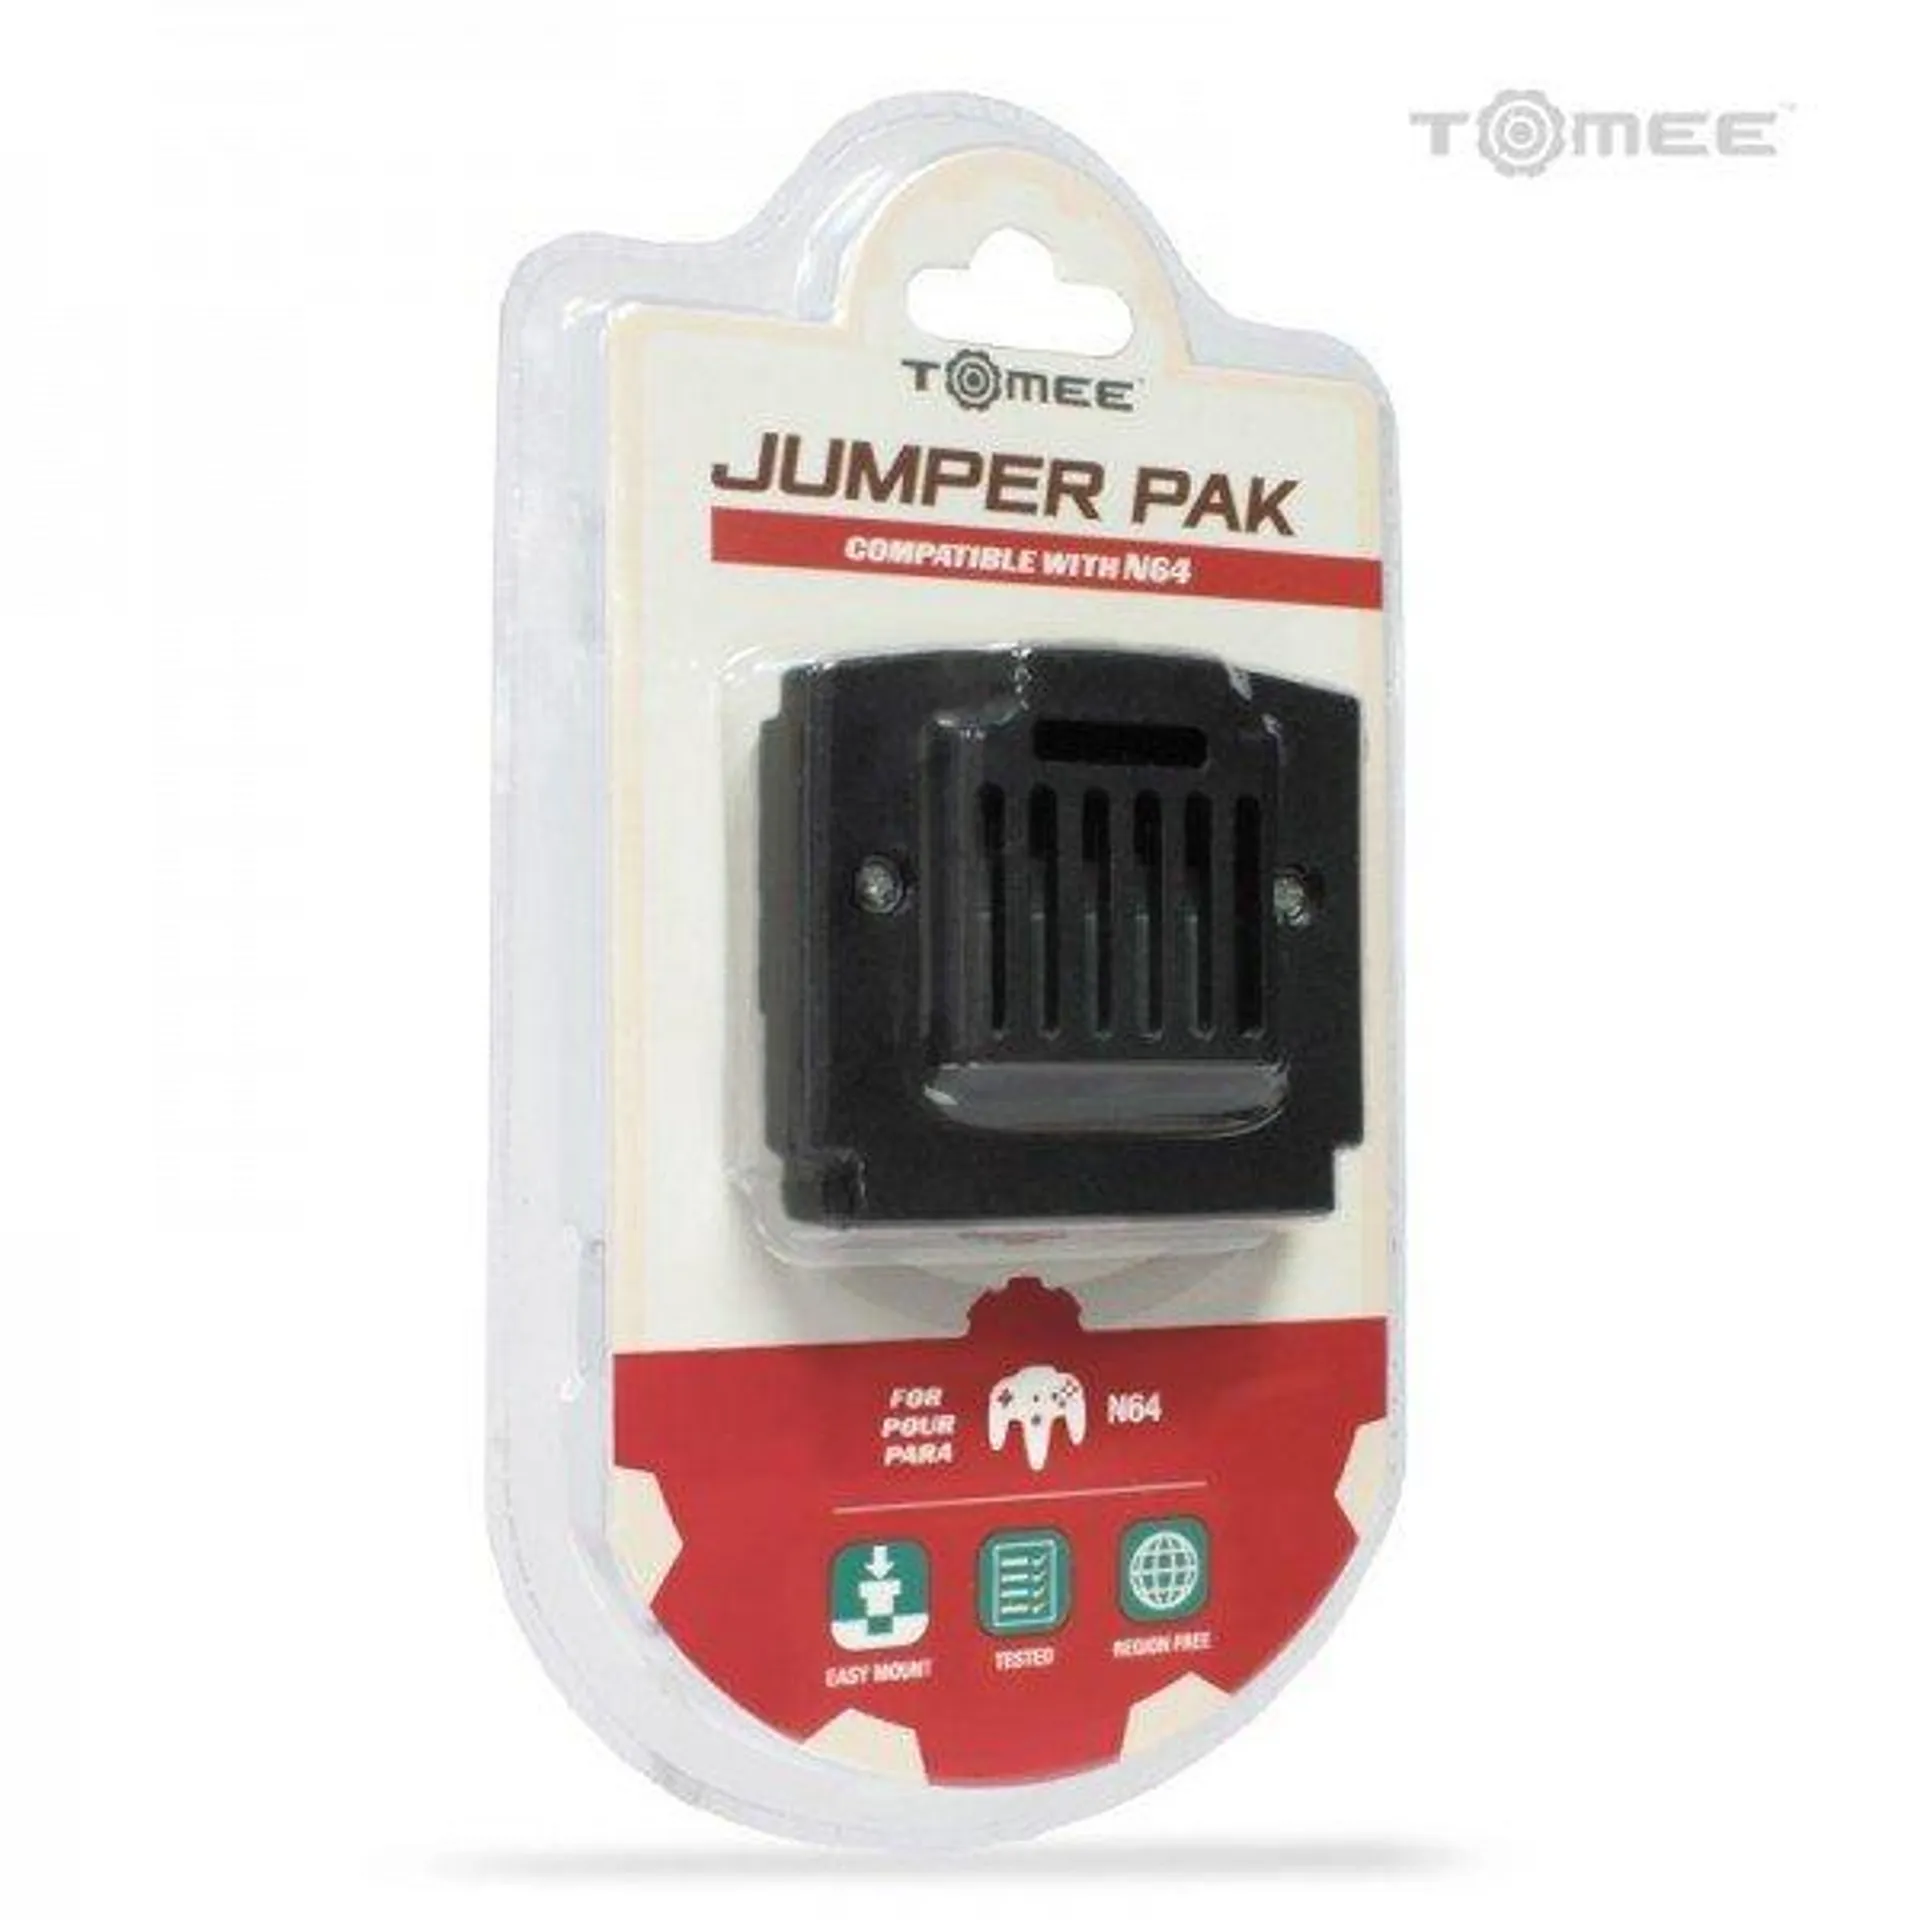 Jumper pack pour N64